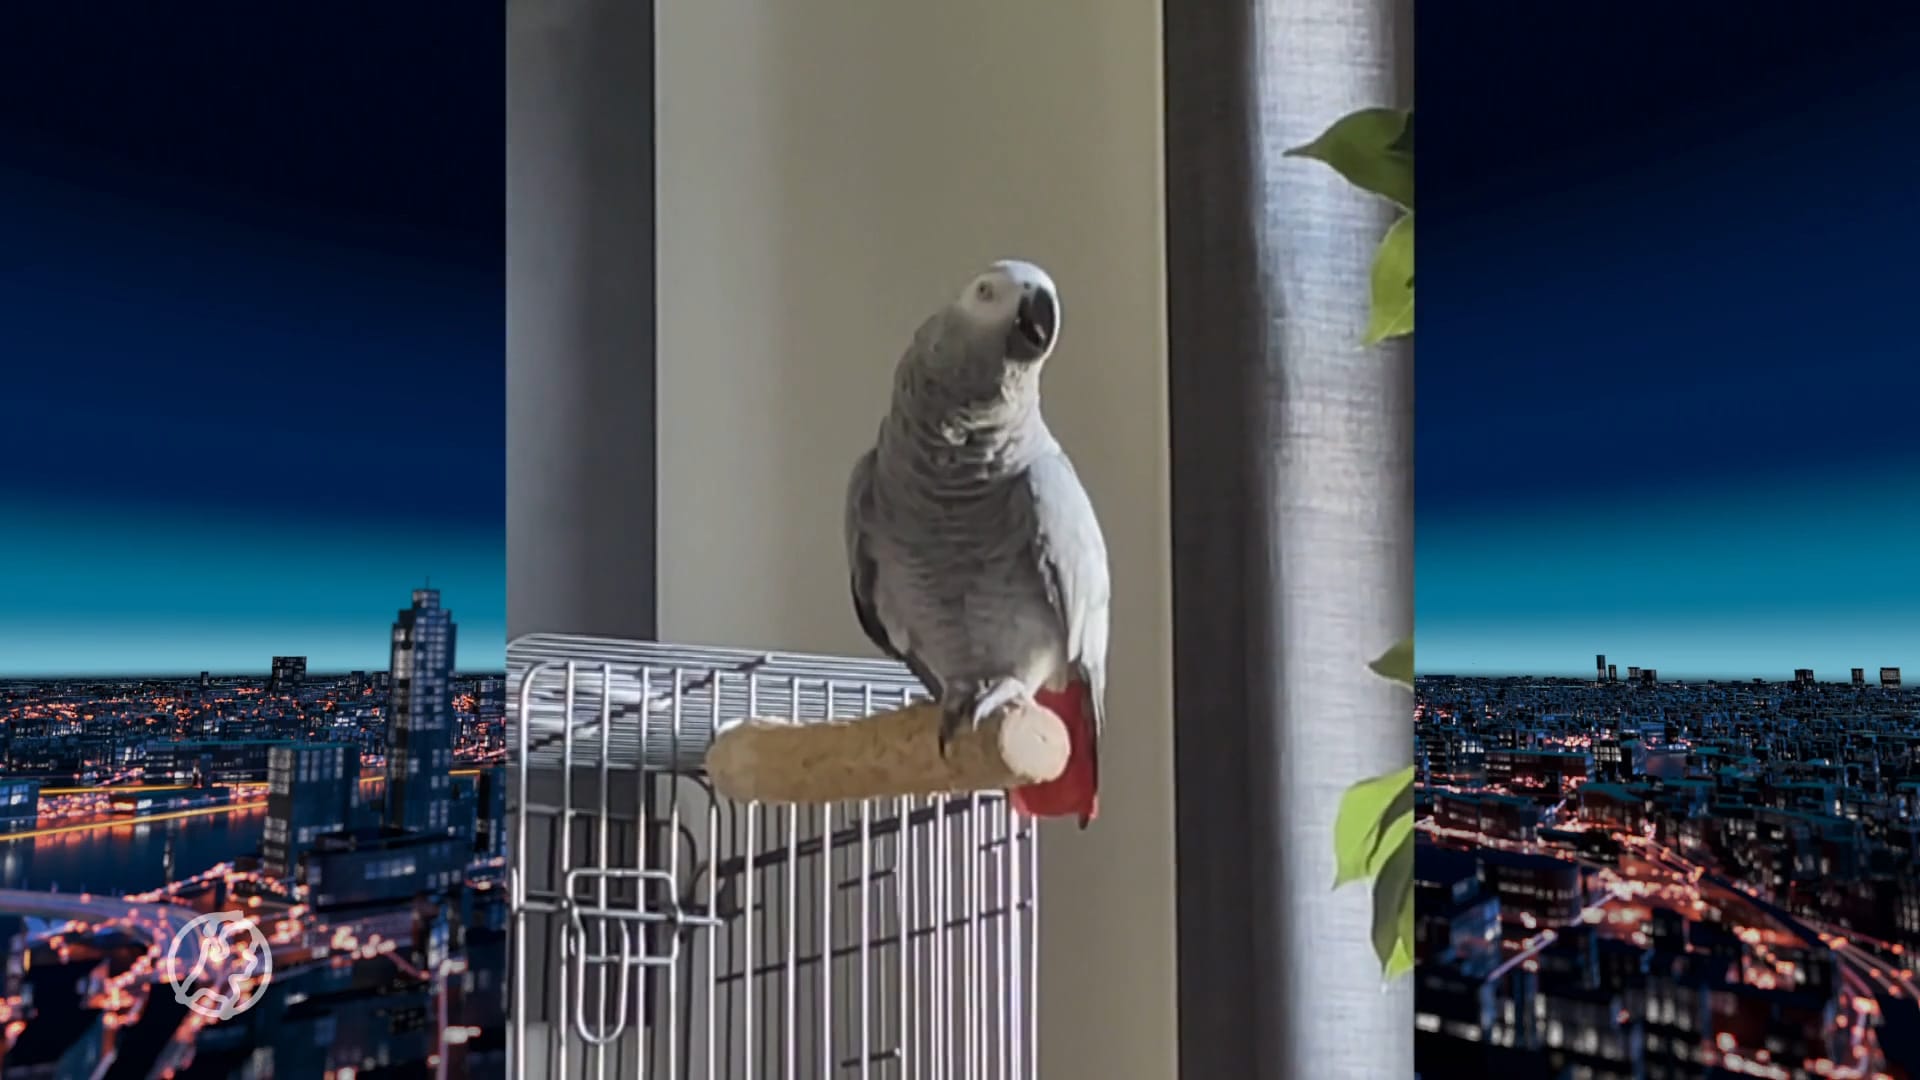 Ontsnapte papegaai Pino dood teruggevonden